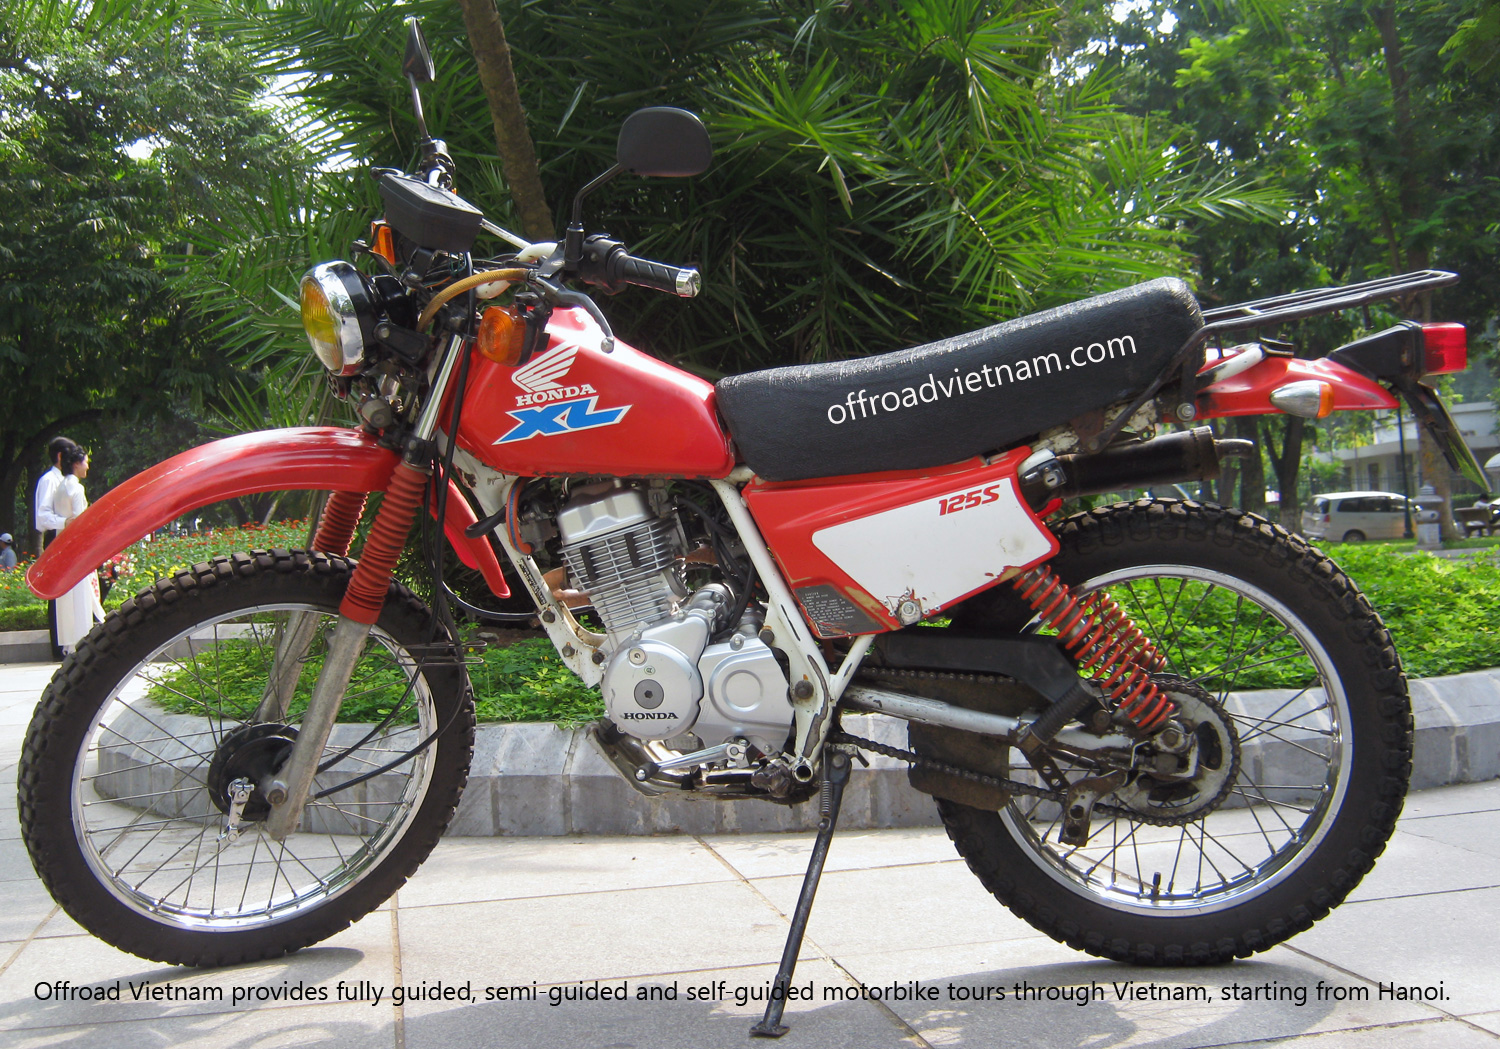 Honda motorbike for sale vietnam #6